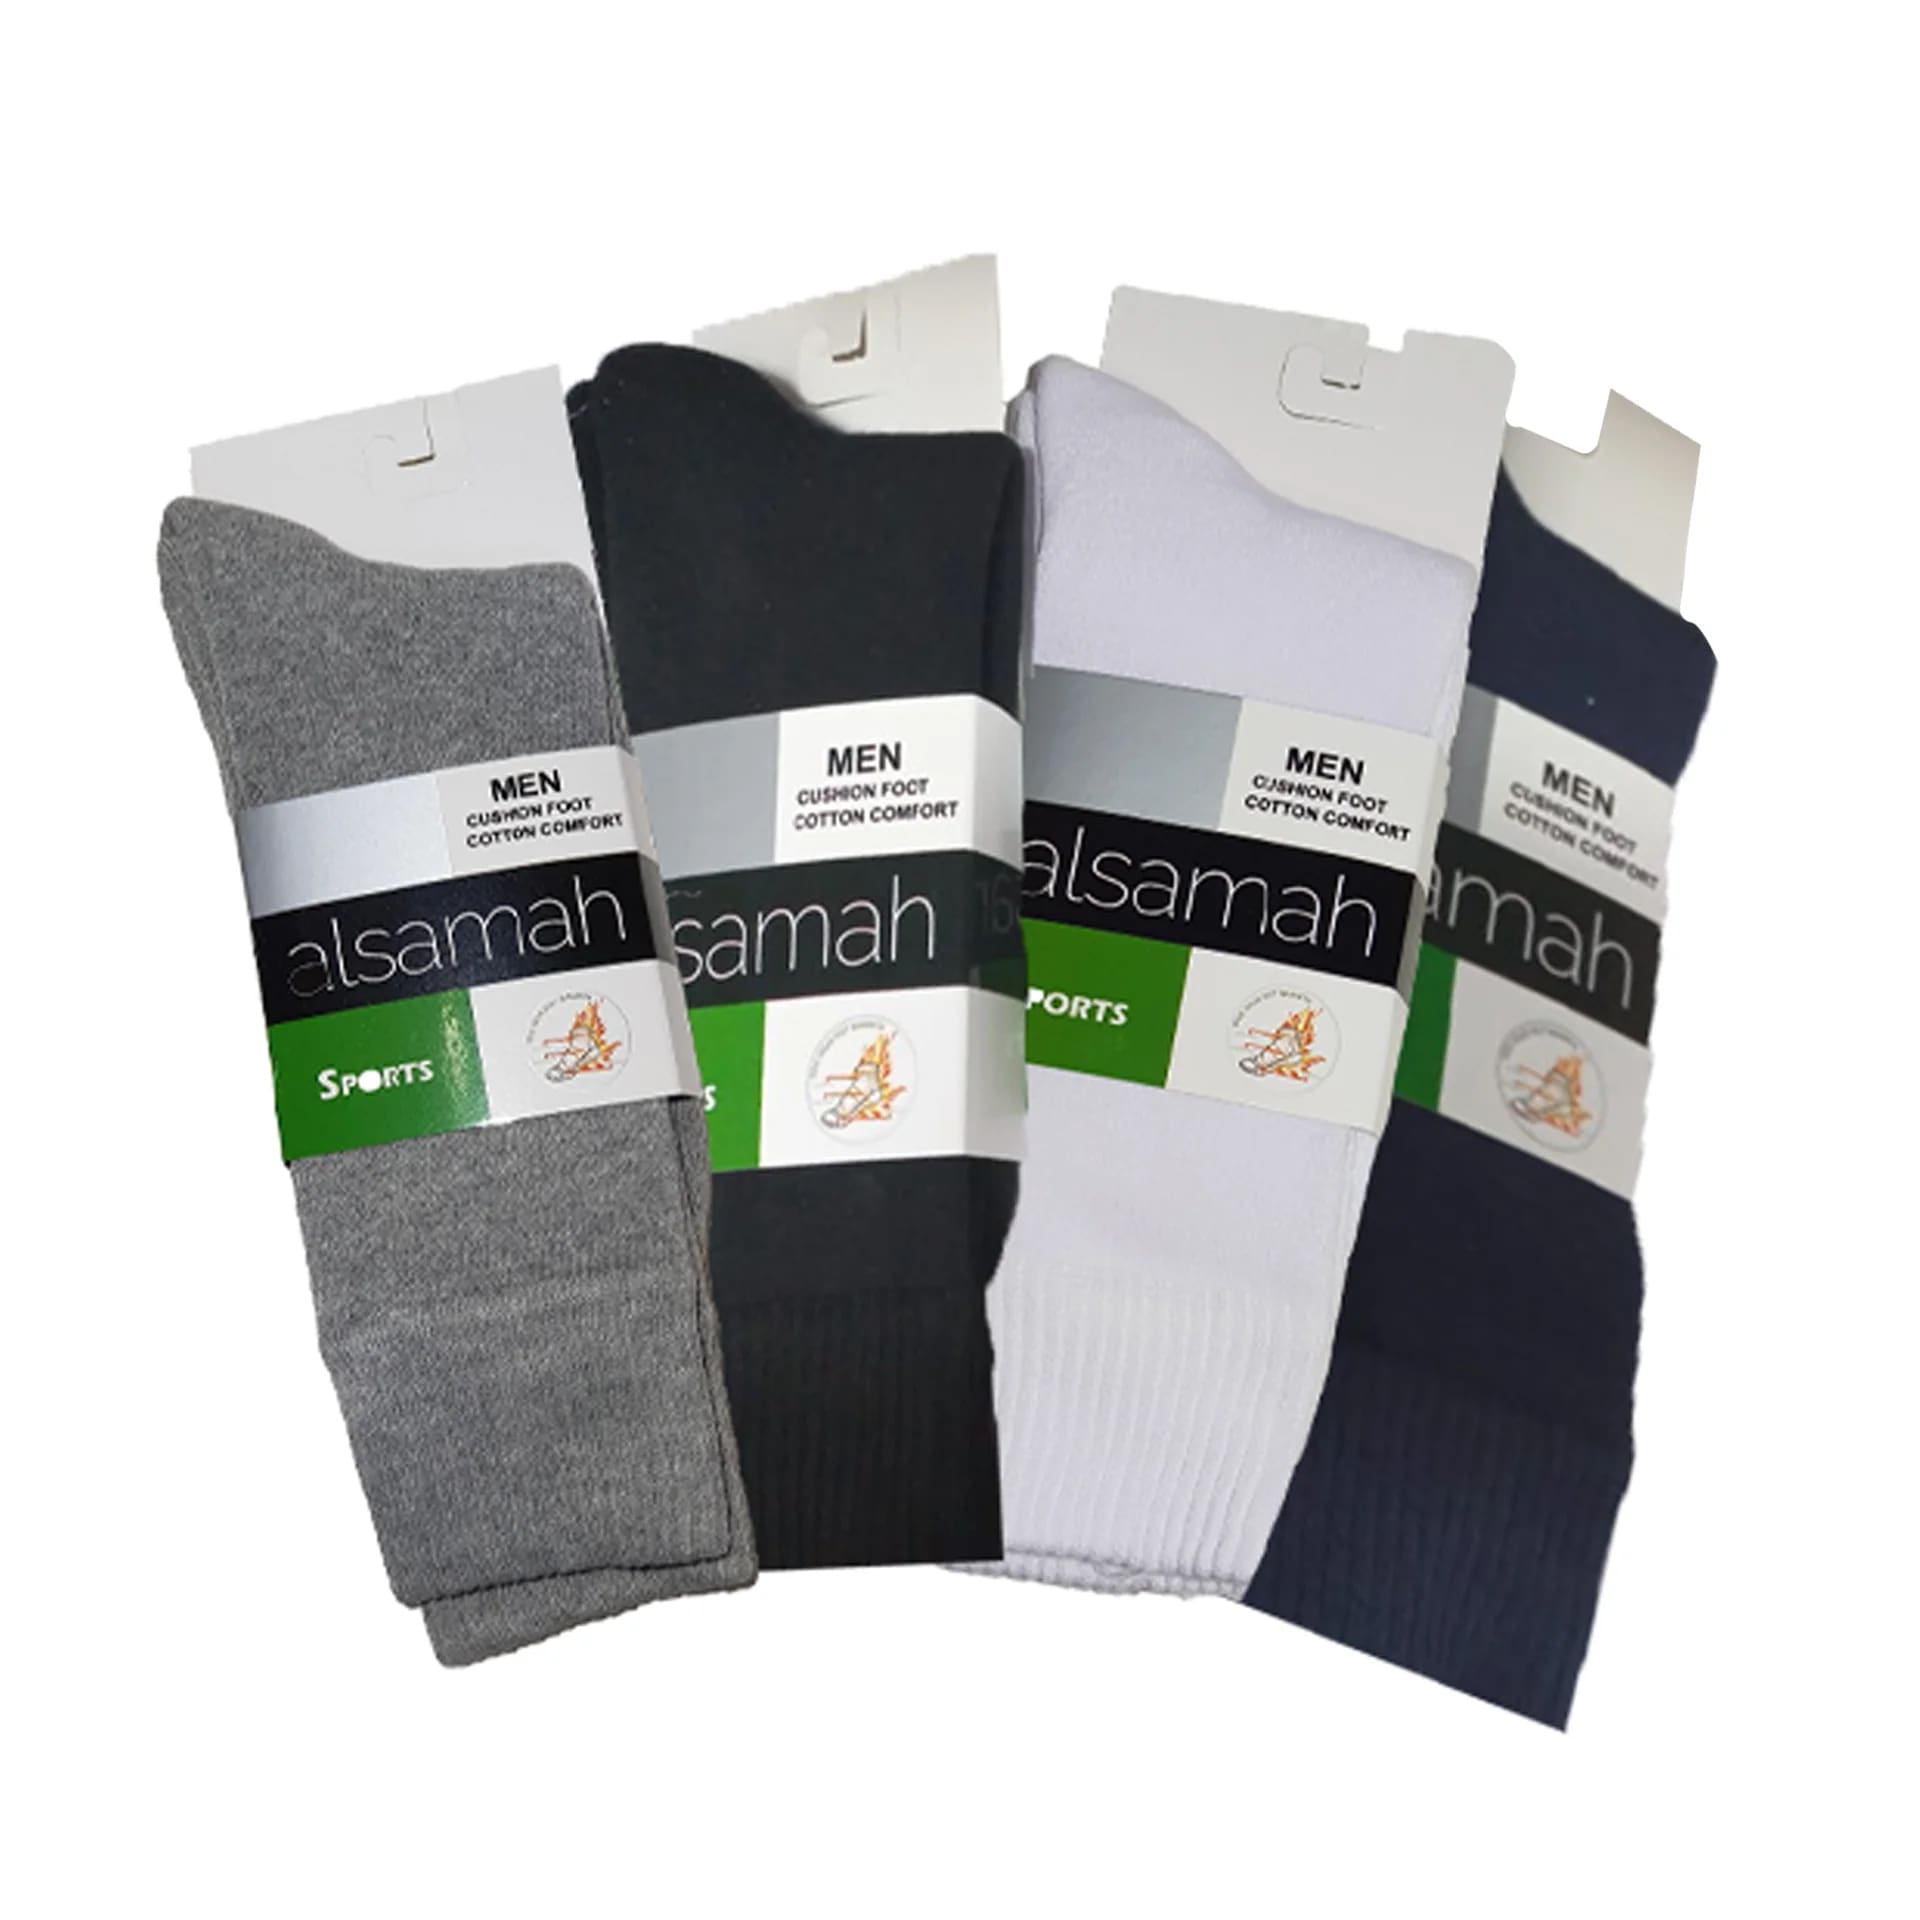 Men's Bashkir socks from White color al samah